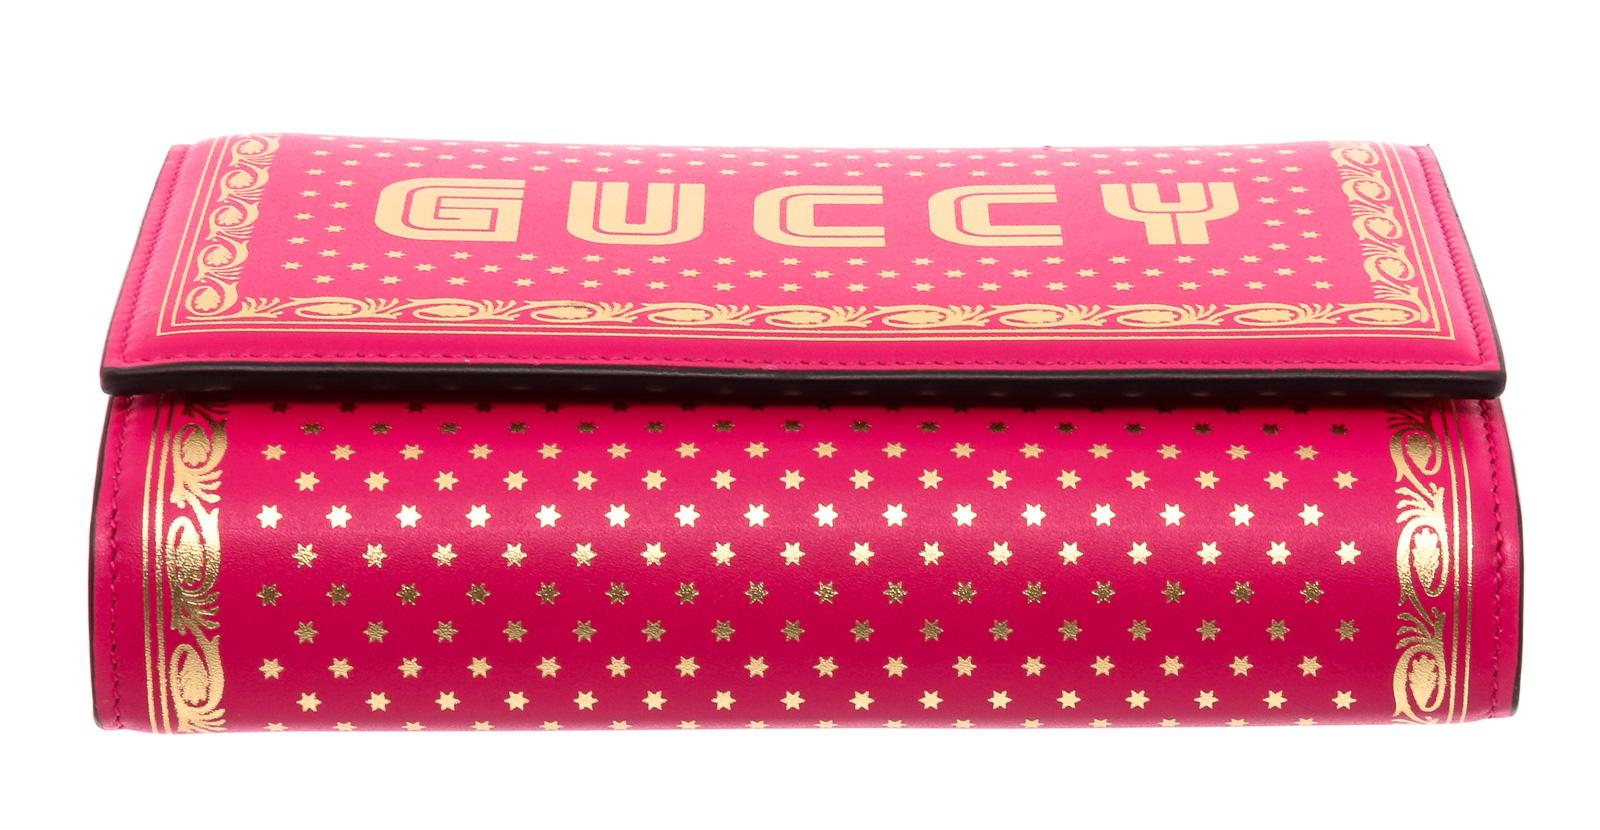 gucci woc pink